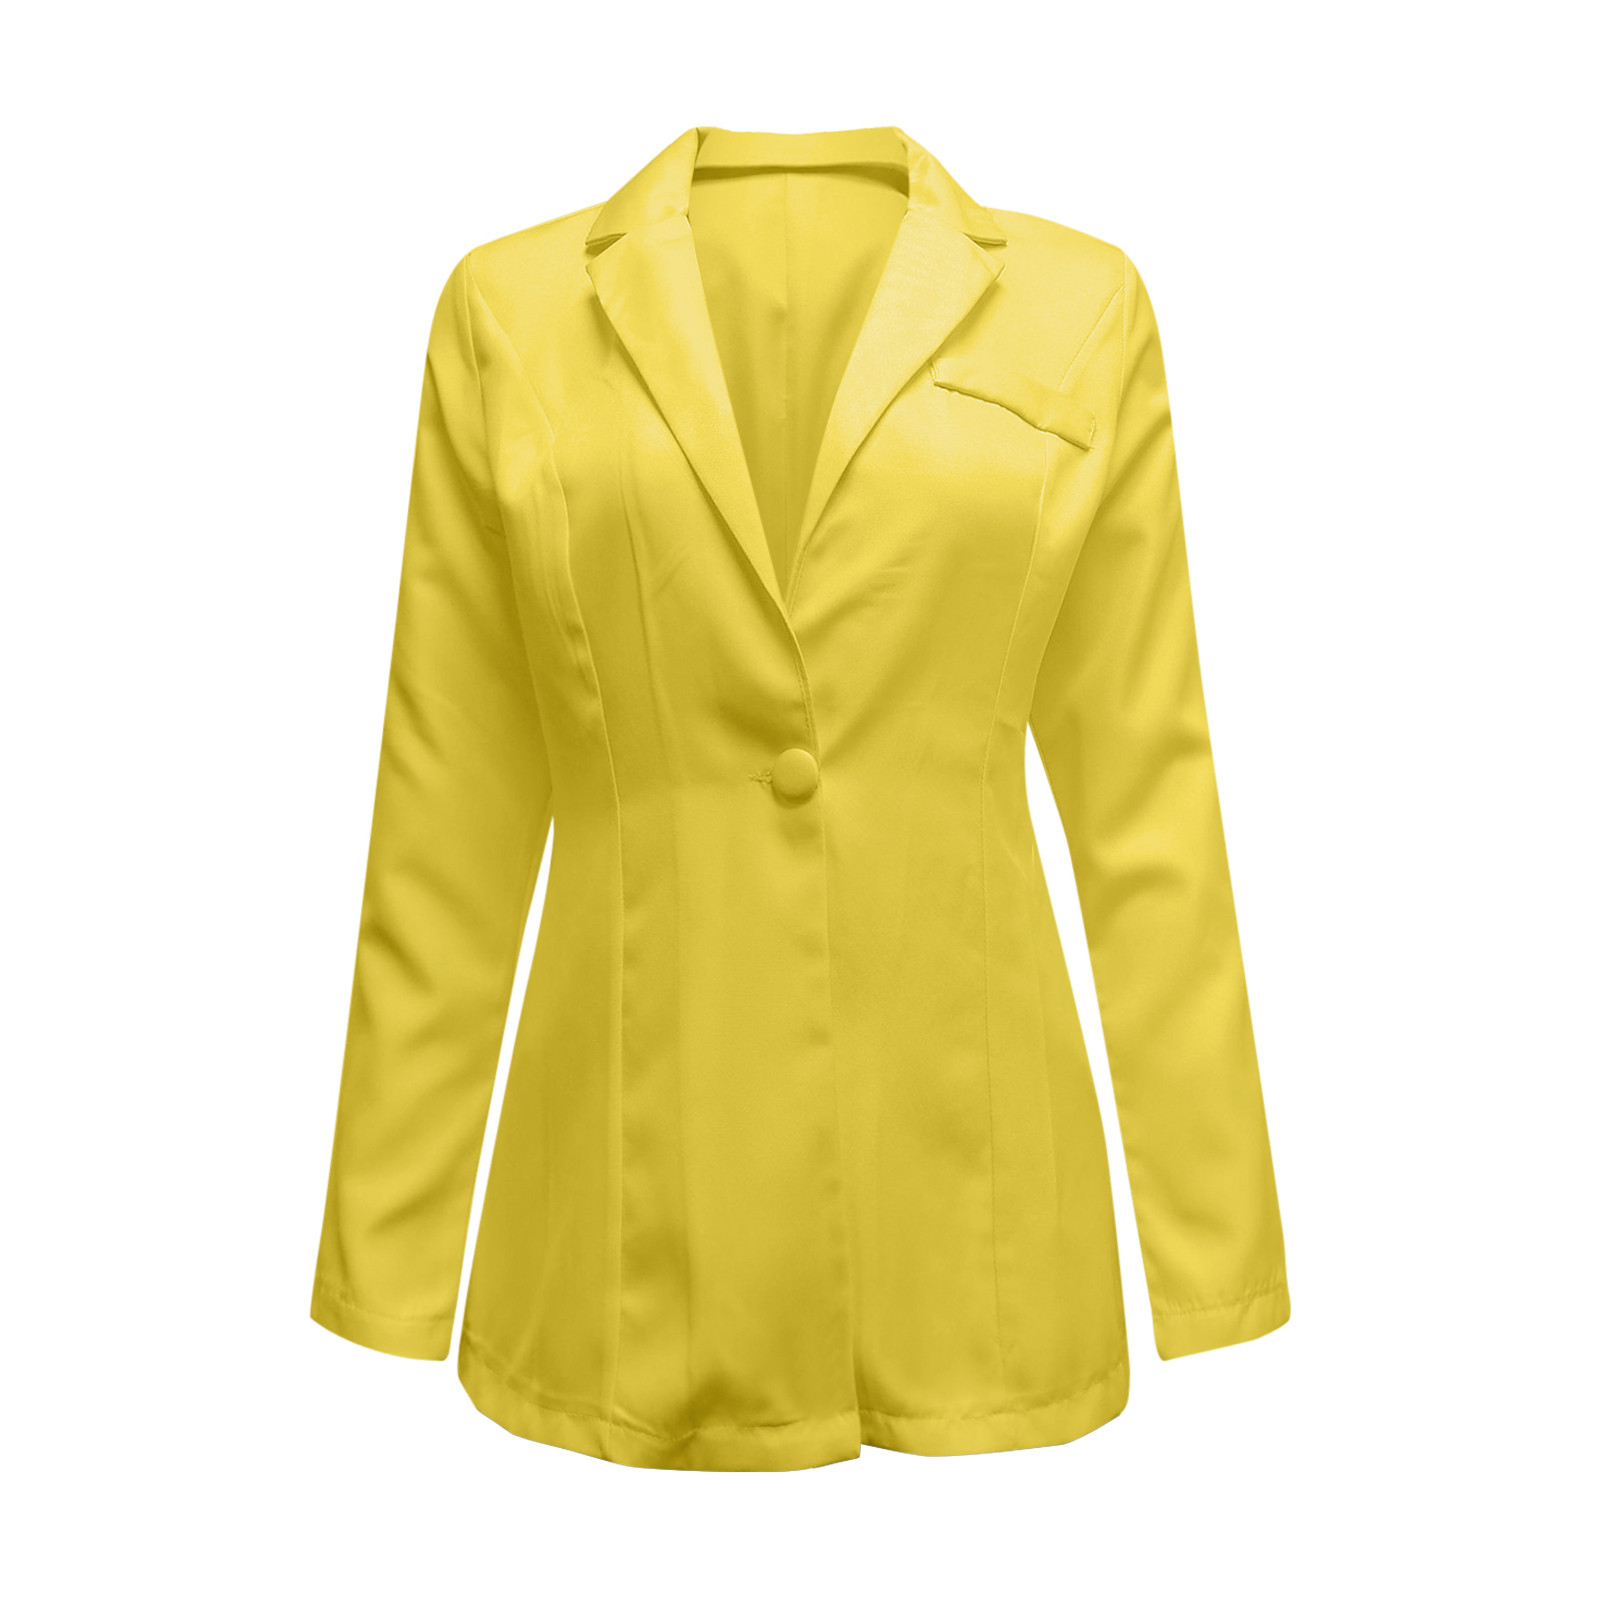 iOPQO blazer jackets for women Women's Casual Light Weight Thin Jacket Slim Coat Long Sleeve Blazer Office Business Coats Jacket Women's Blazers Yellow M - image 4 of 7